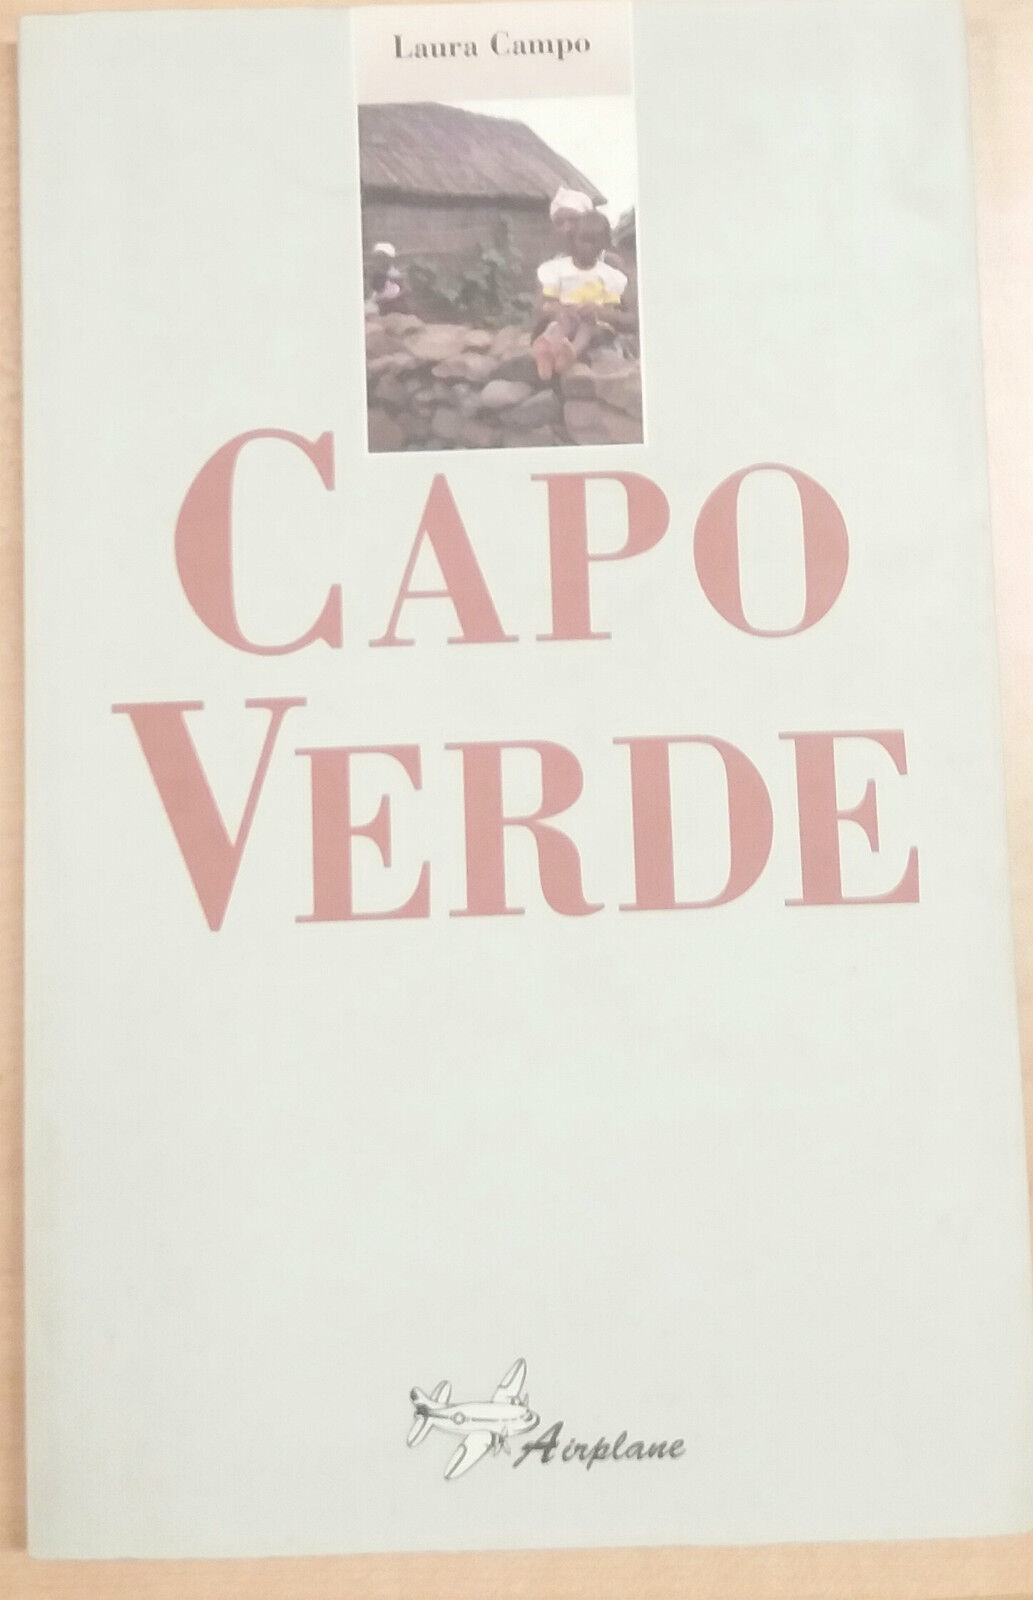 CAPO VERDE - LAURA CAMPO - AIRPLANE - 2001 - M 